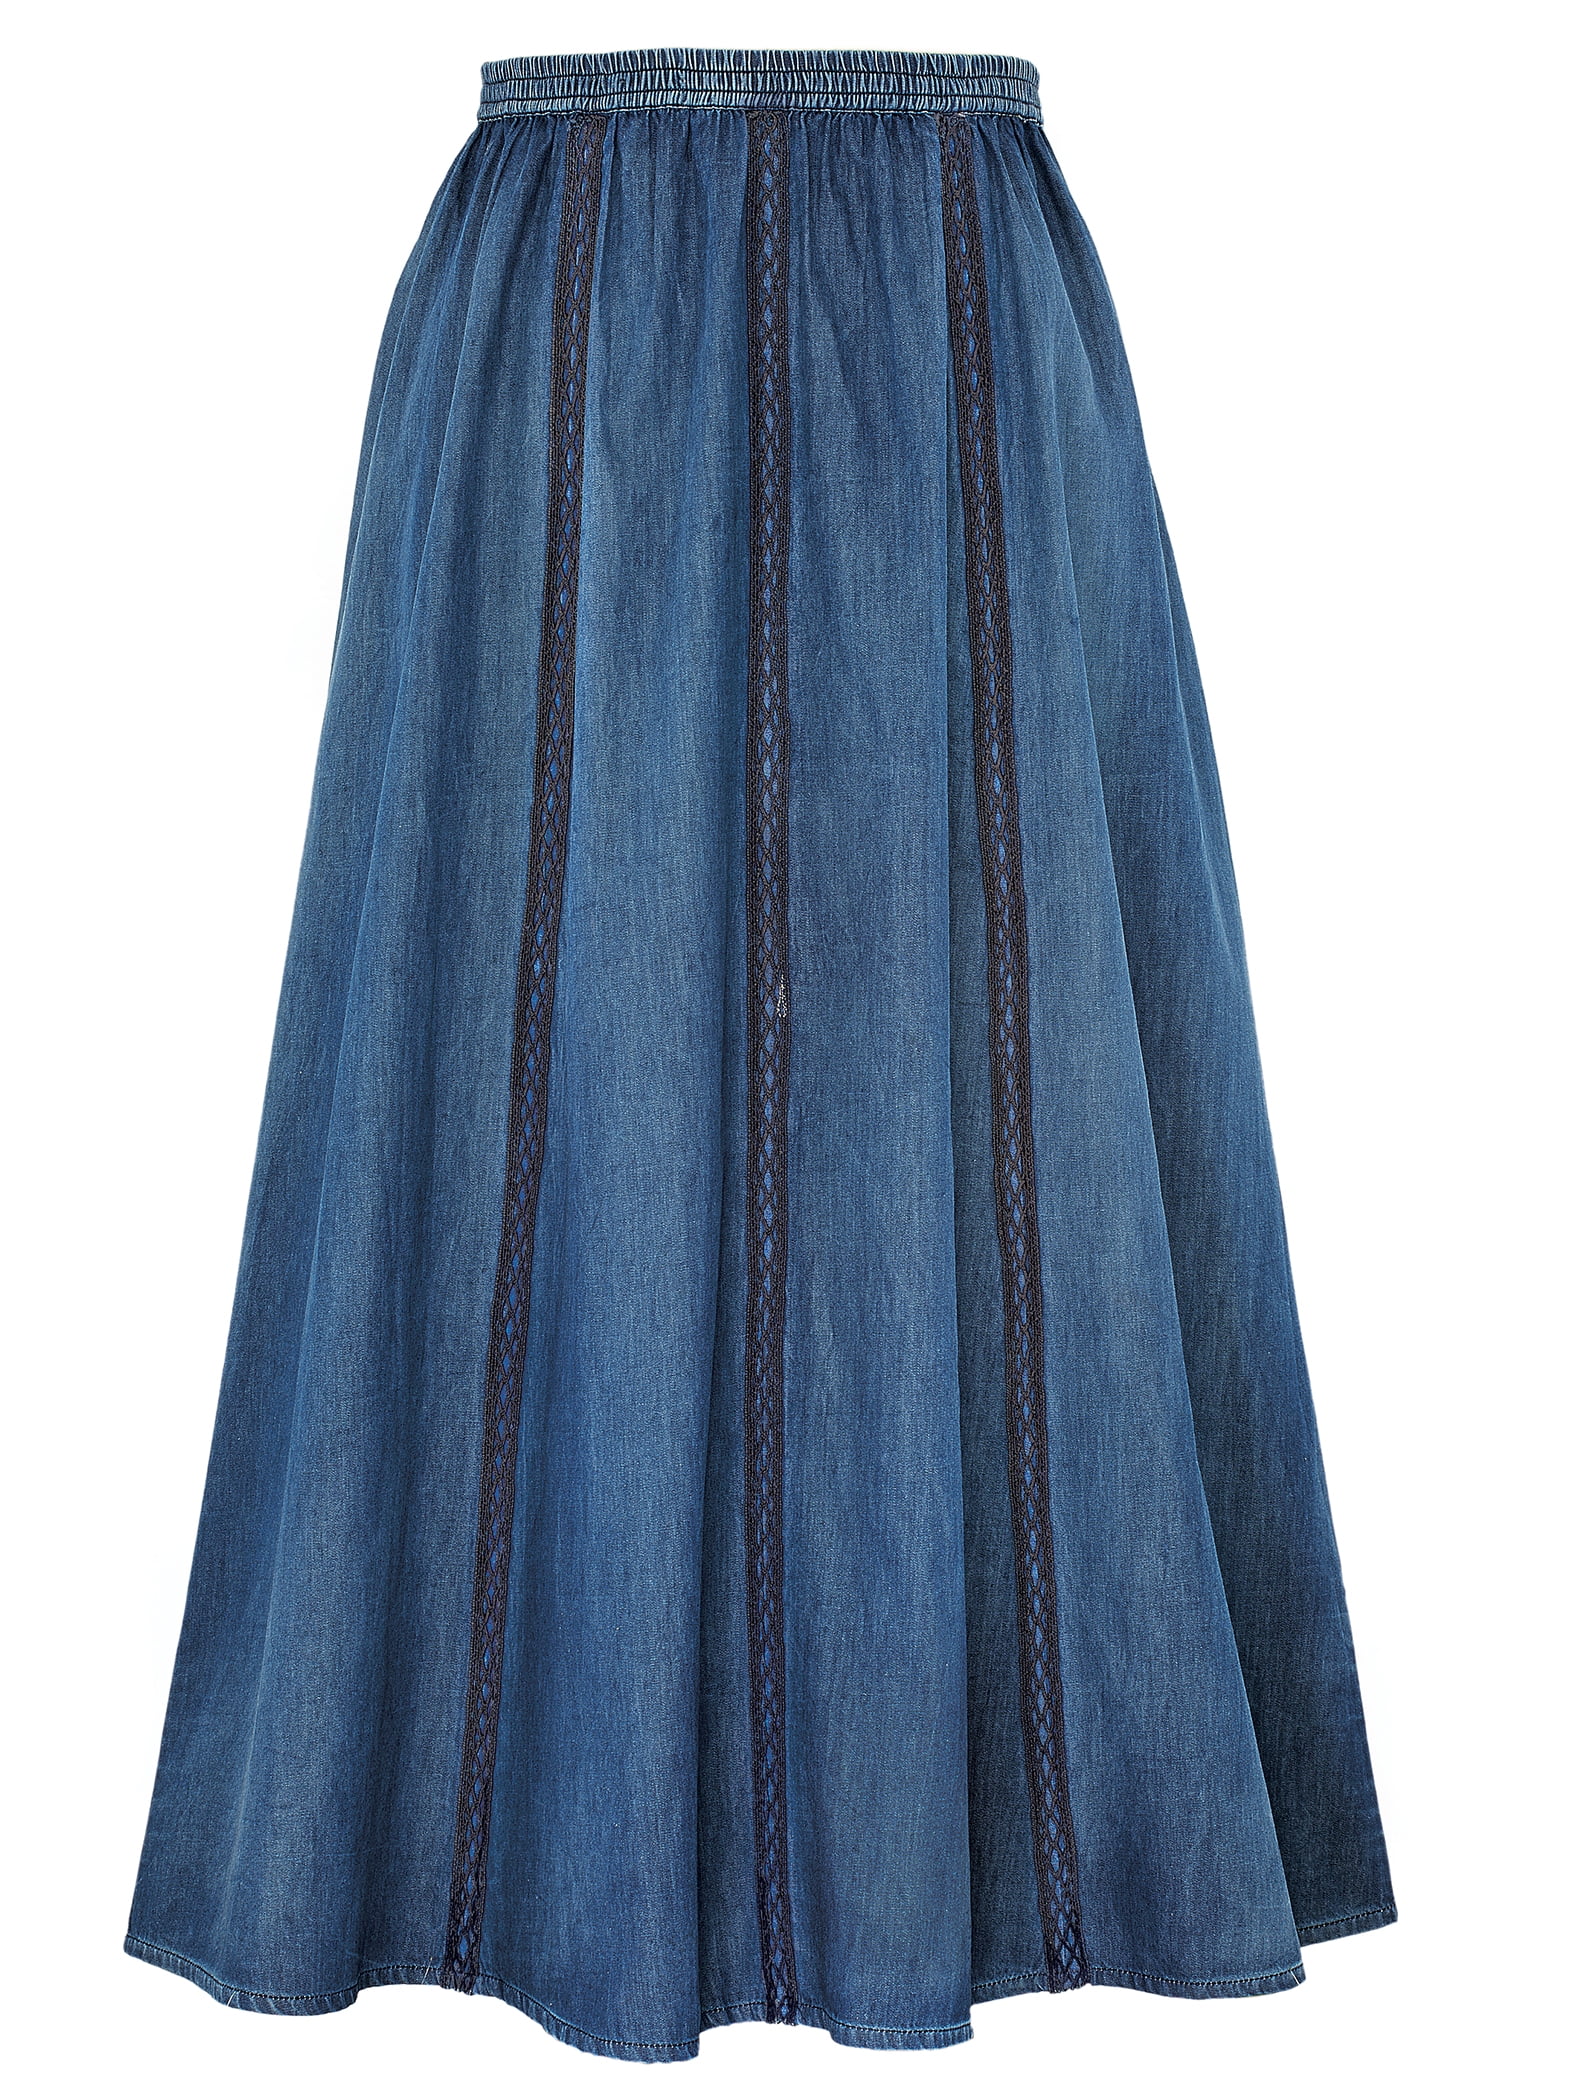 Women Denim Flared Belt Midi Skirt Vintage Retro High Waist Pleated Lady Fashion 